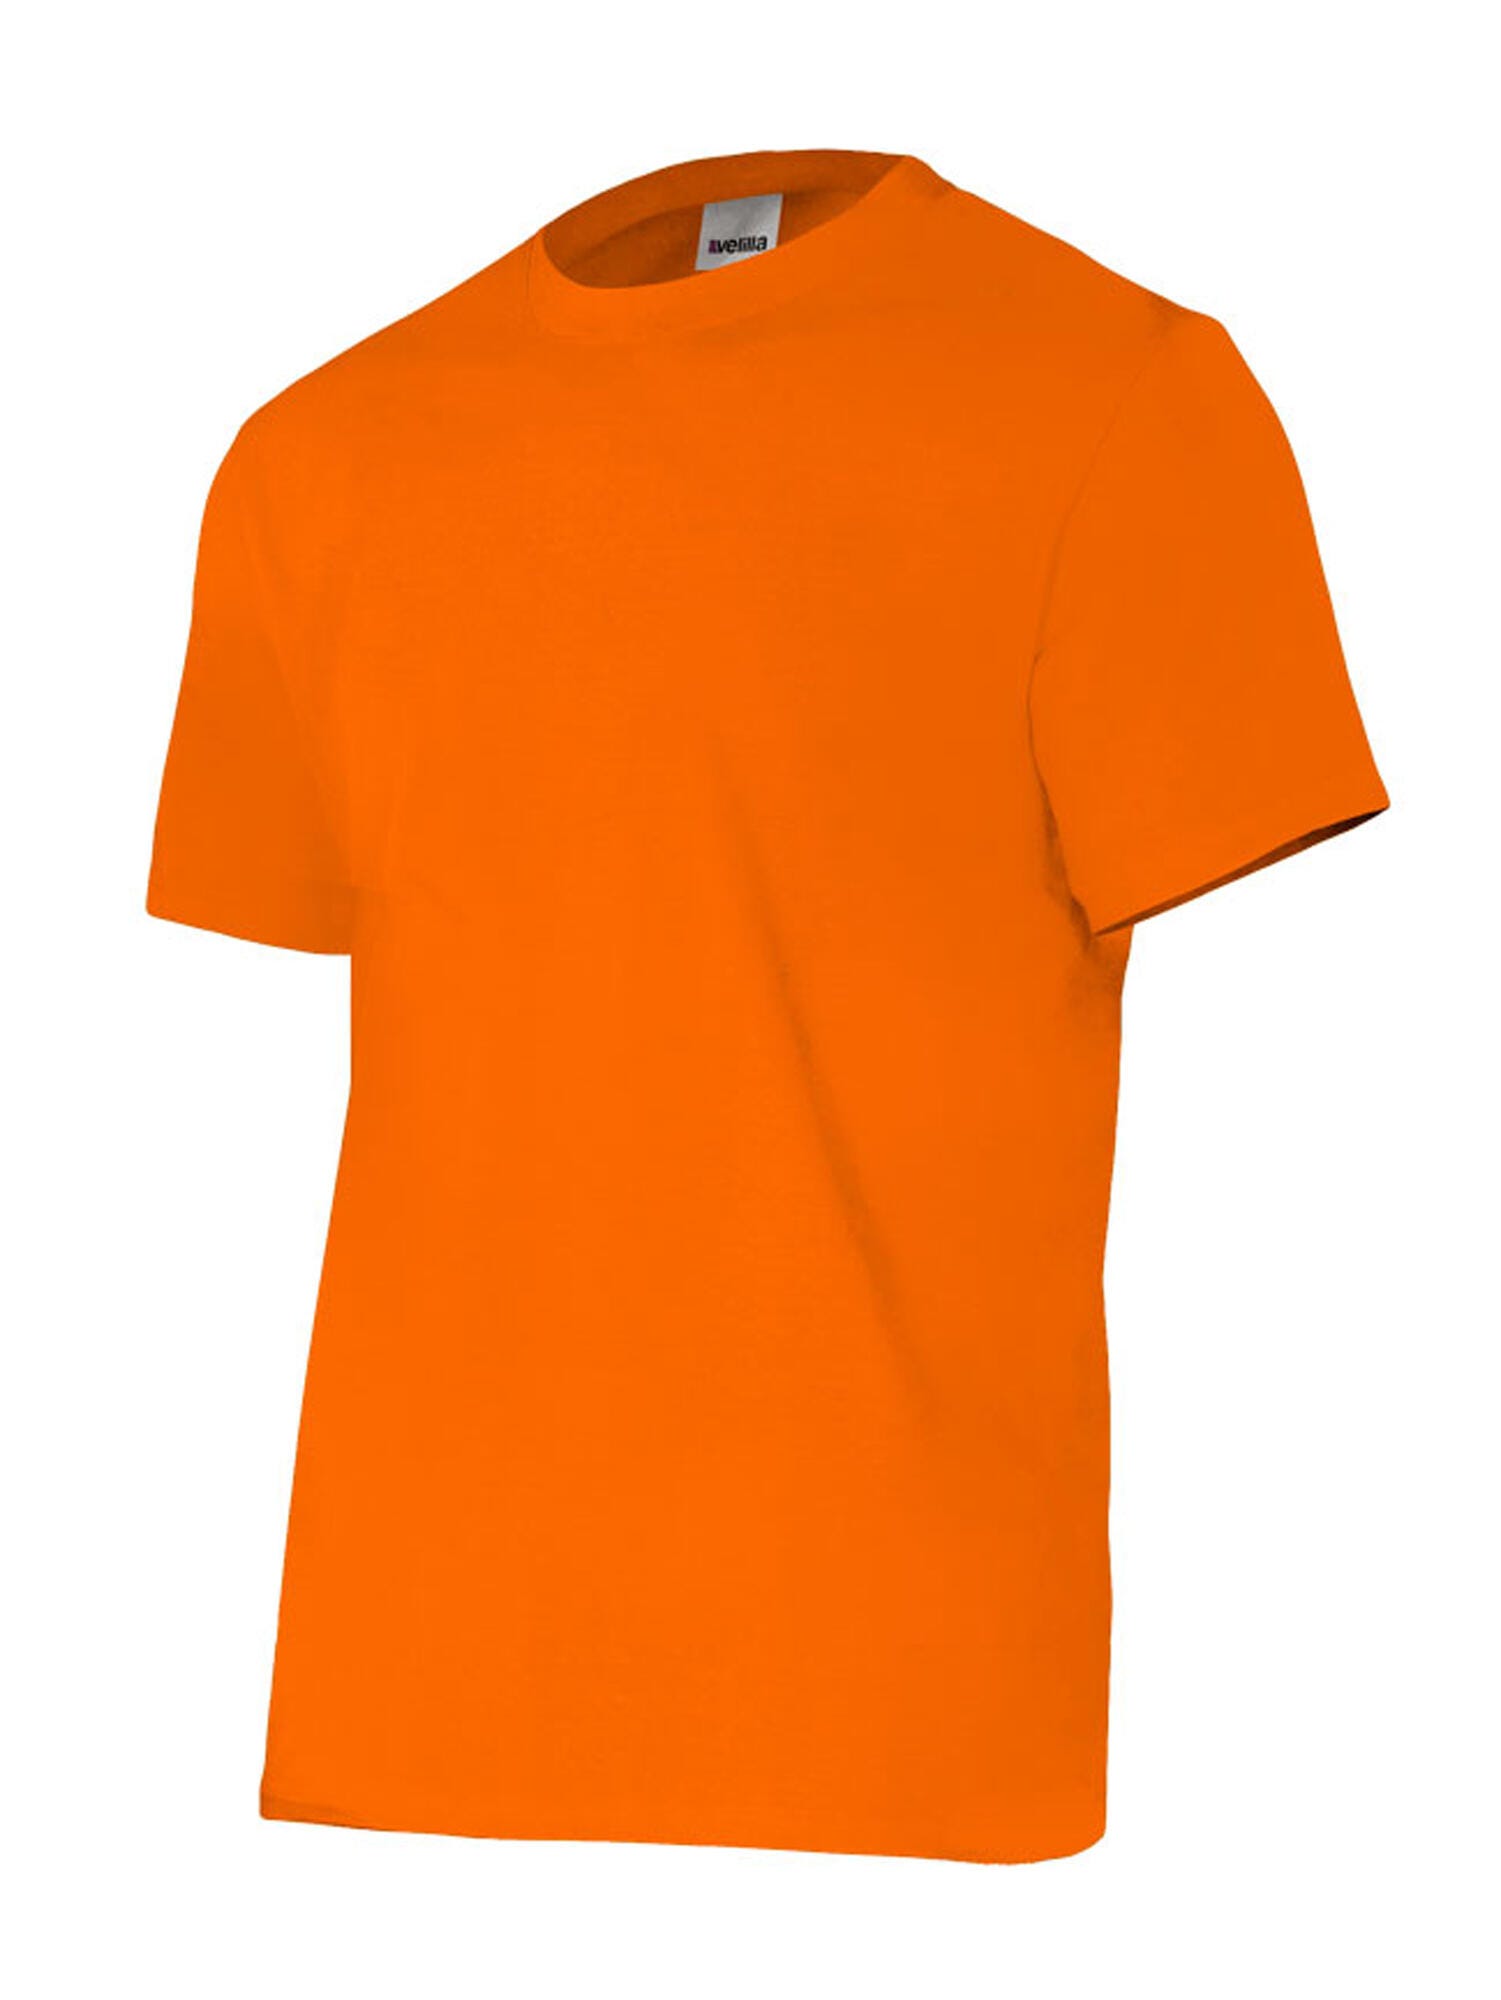 Camiseta manga corta naranja xl